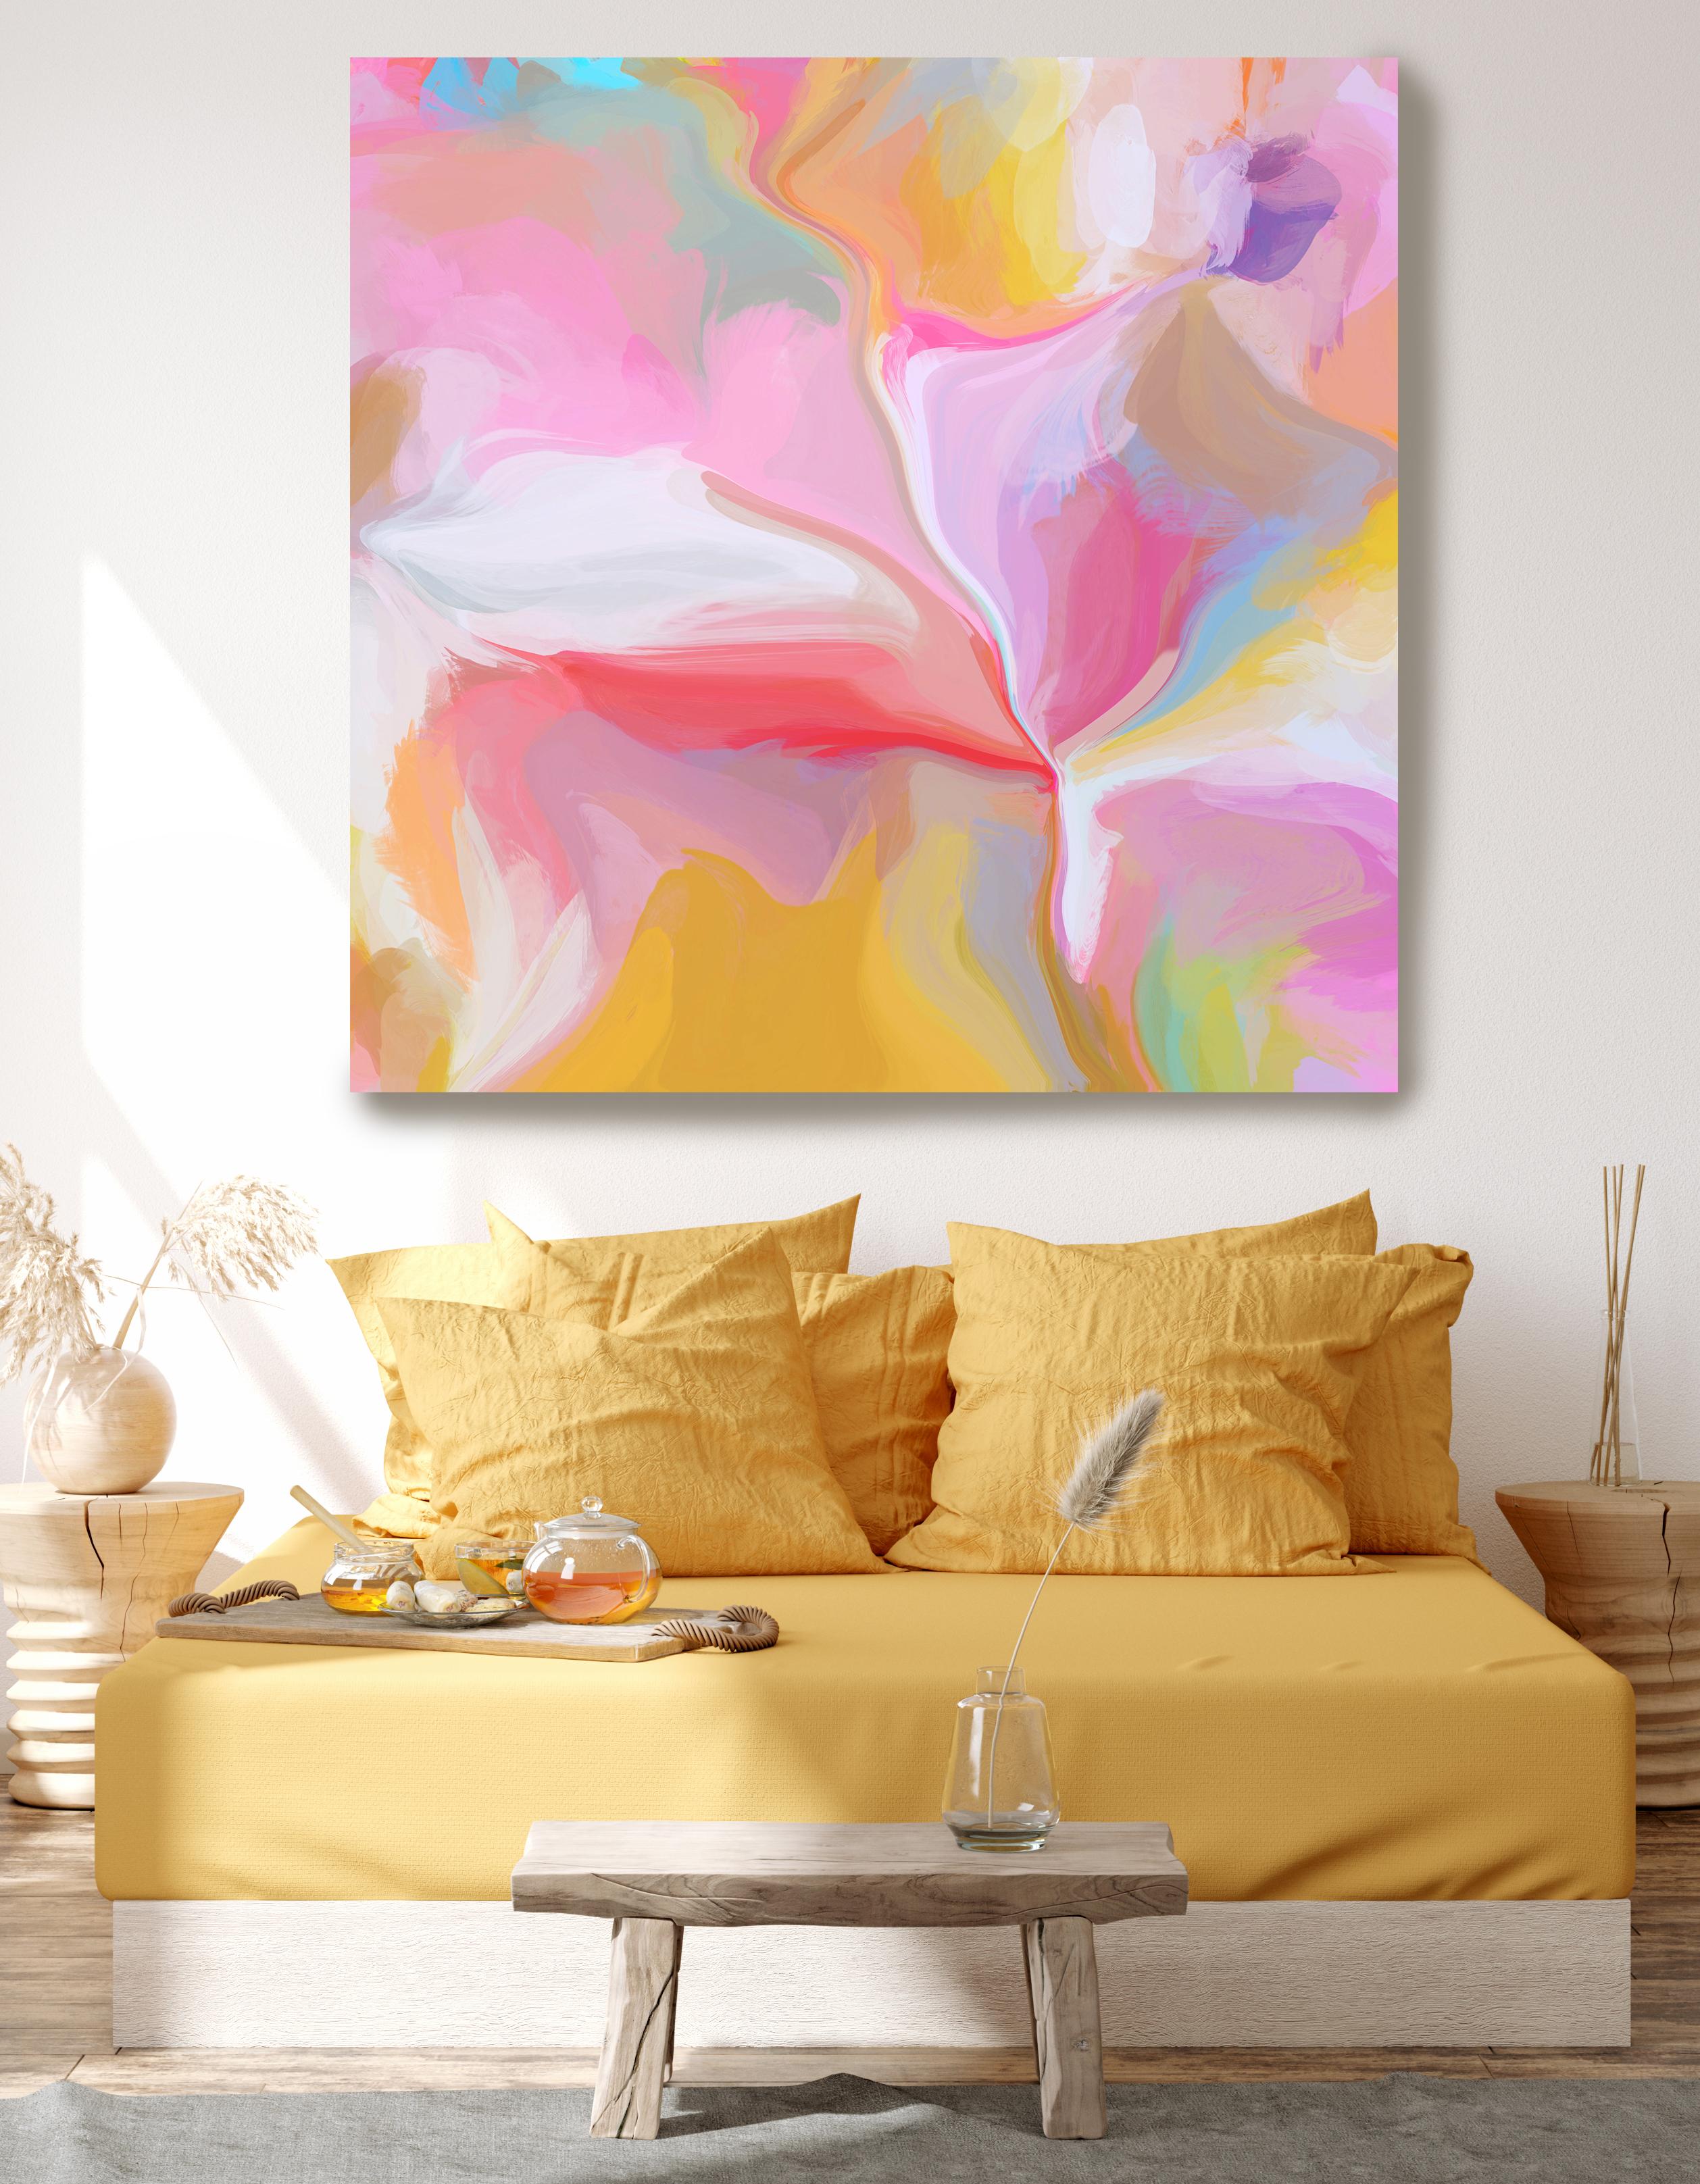 Irena Orlov Interior Painting - Yellow Pink Painting Mixed Medium on Canvas 48x48" Happy Day